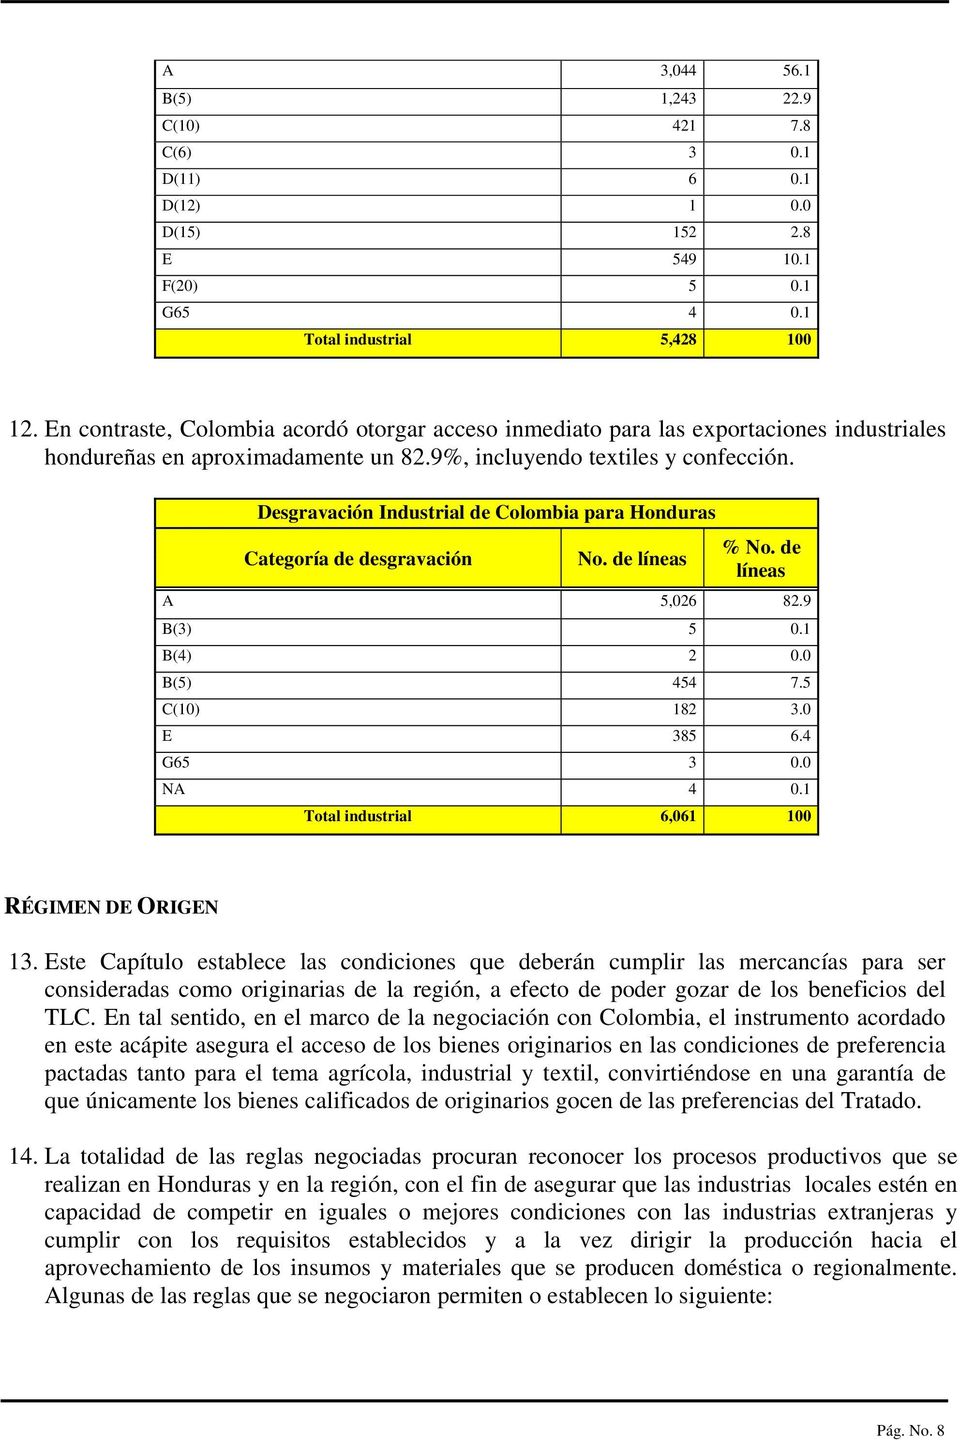 Desgravación Industrial de Colombia para Honduras Categoría de desgravación No. de líneas % No. de líneas A 5,026 82.9 B(3) 5 0.1 B(4) 2 0.0 B(5) 454 7.5 C(10) 182 3.0 E 385 6.4 G65 3 0.0 NA 4 0.